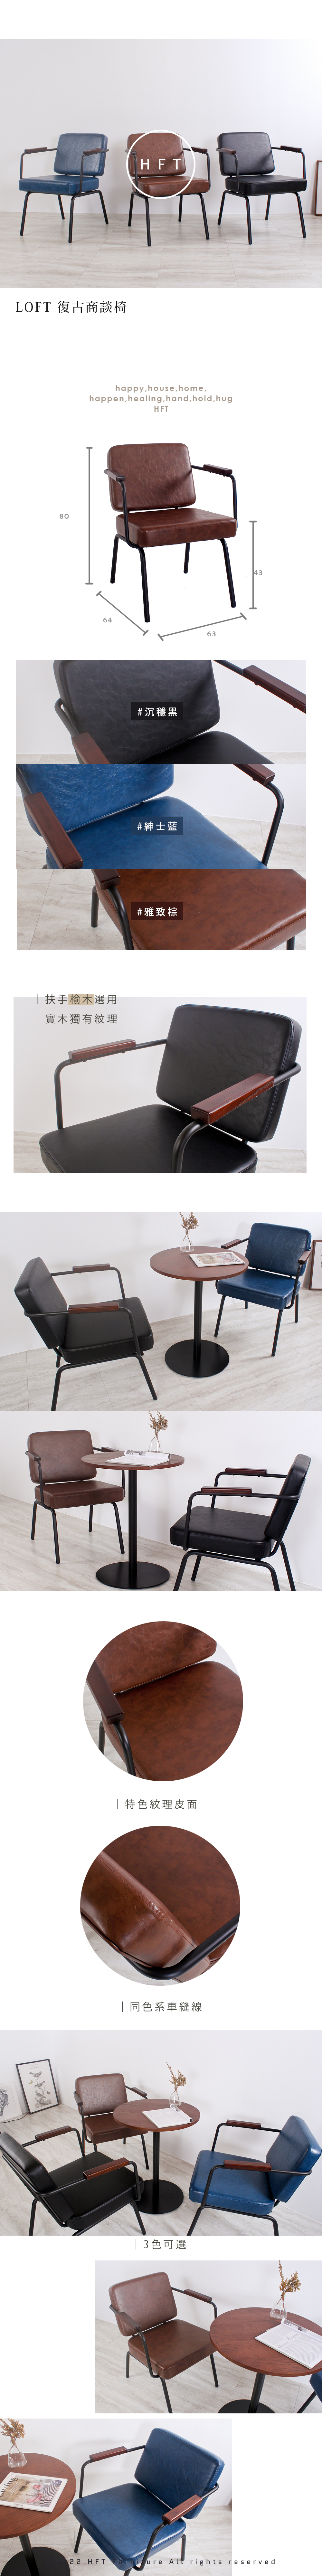 hft-0086-arm-chair